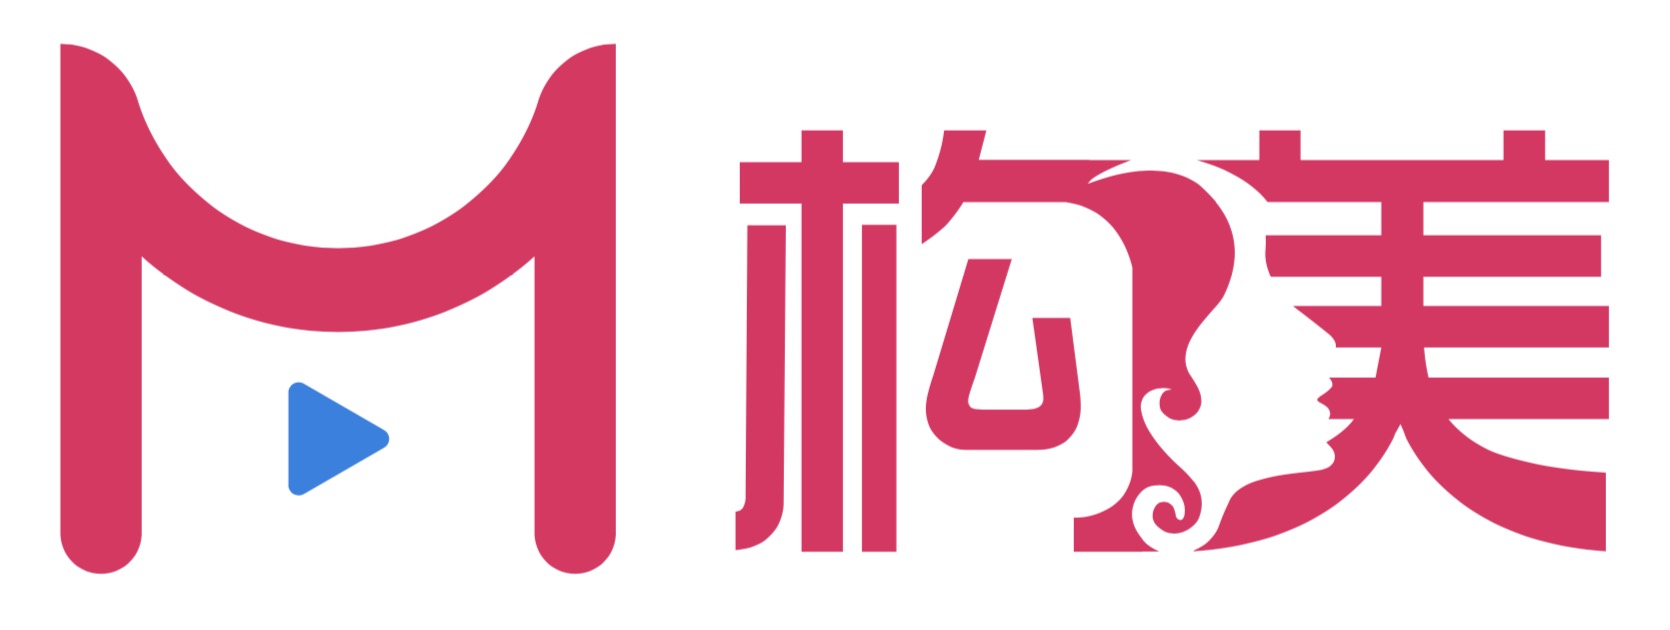 1.构美logo.jpg